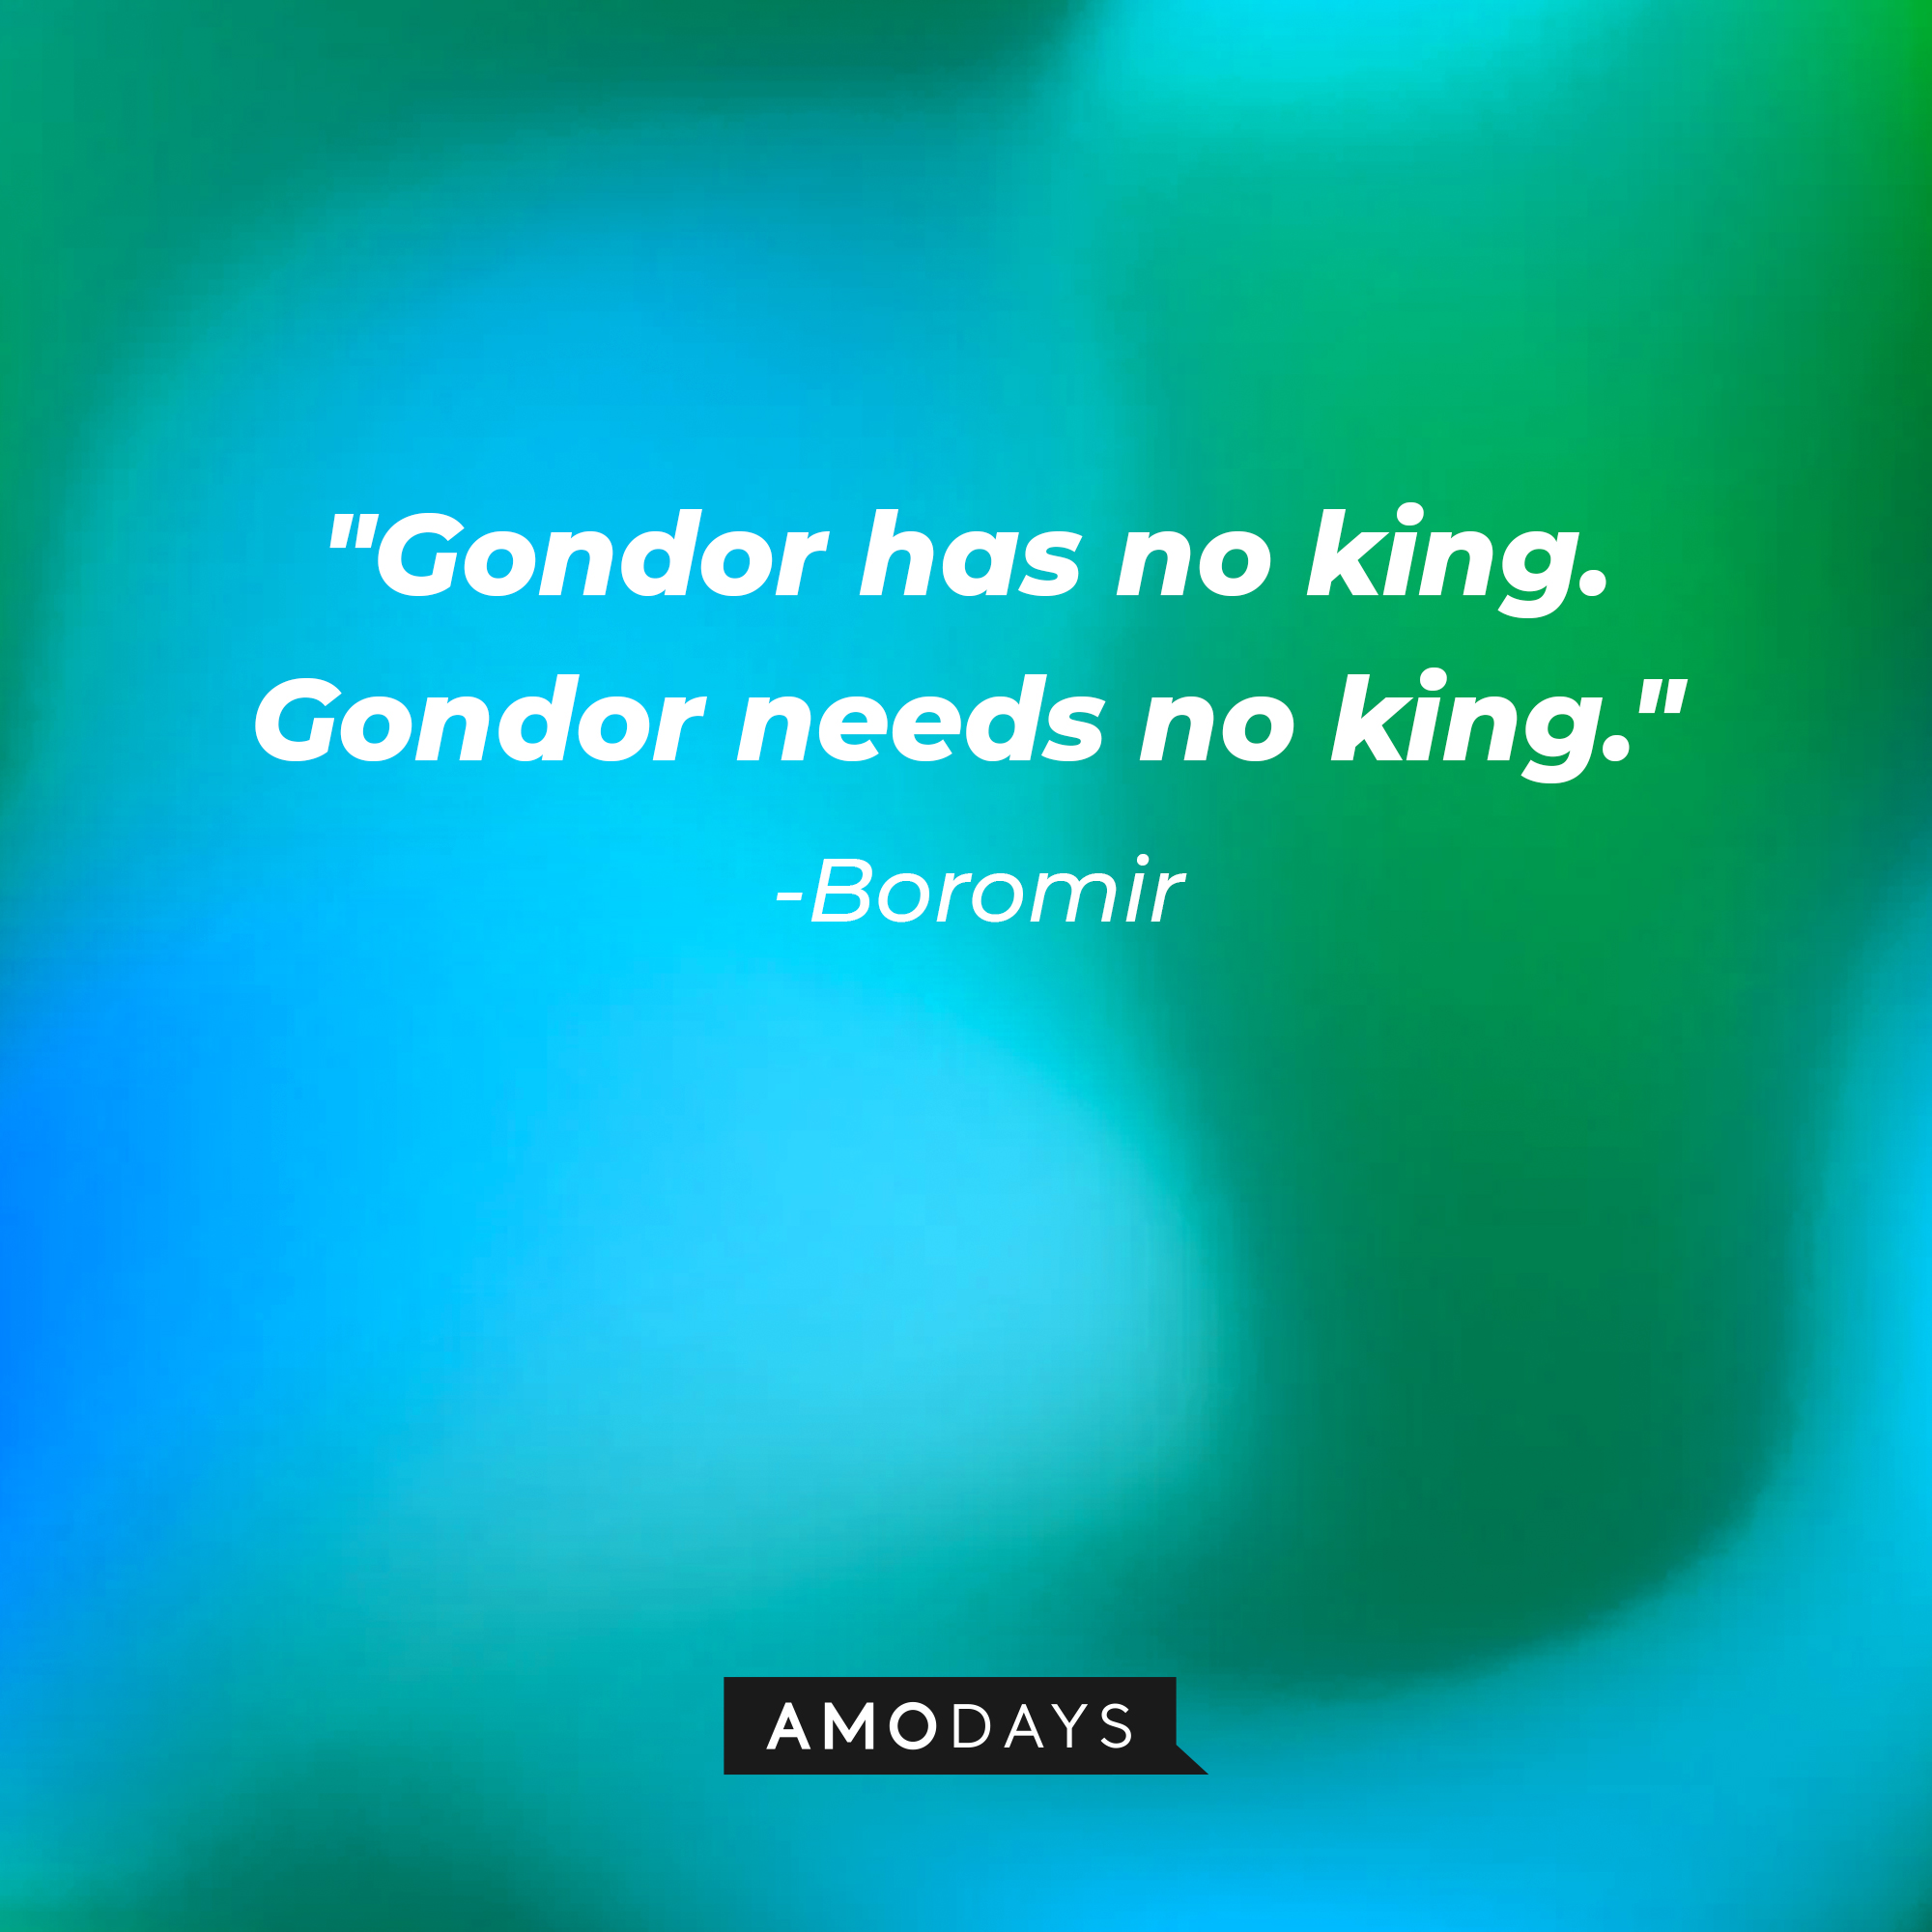 Boromir's quote: "Gondor has no king. Gondor needs no king." | Source: AmoDays